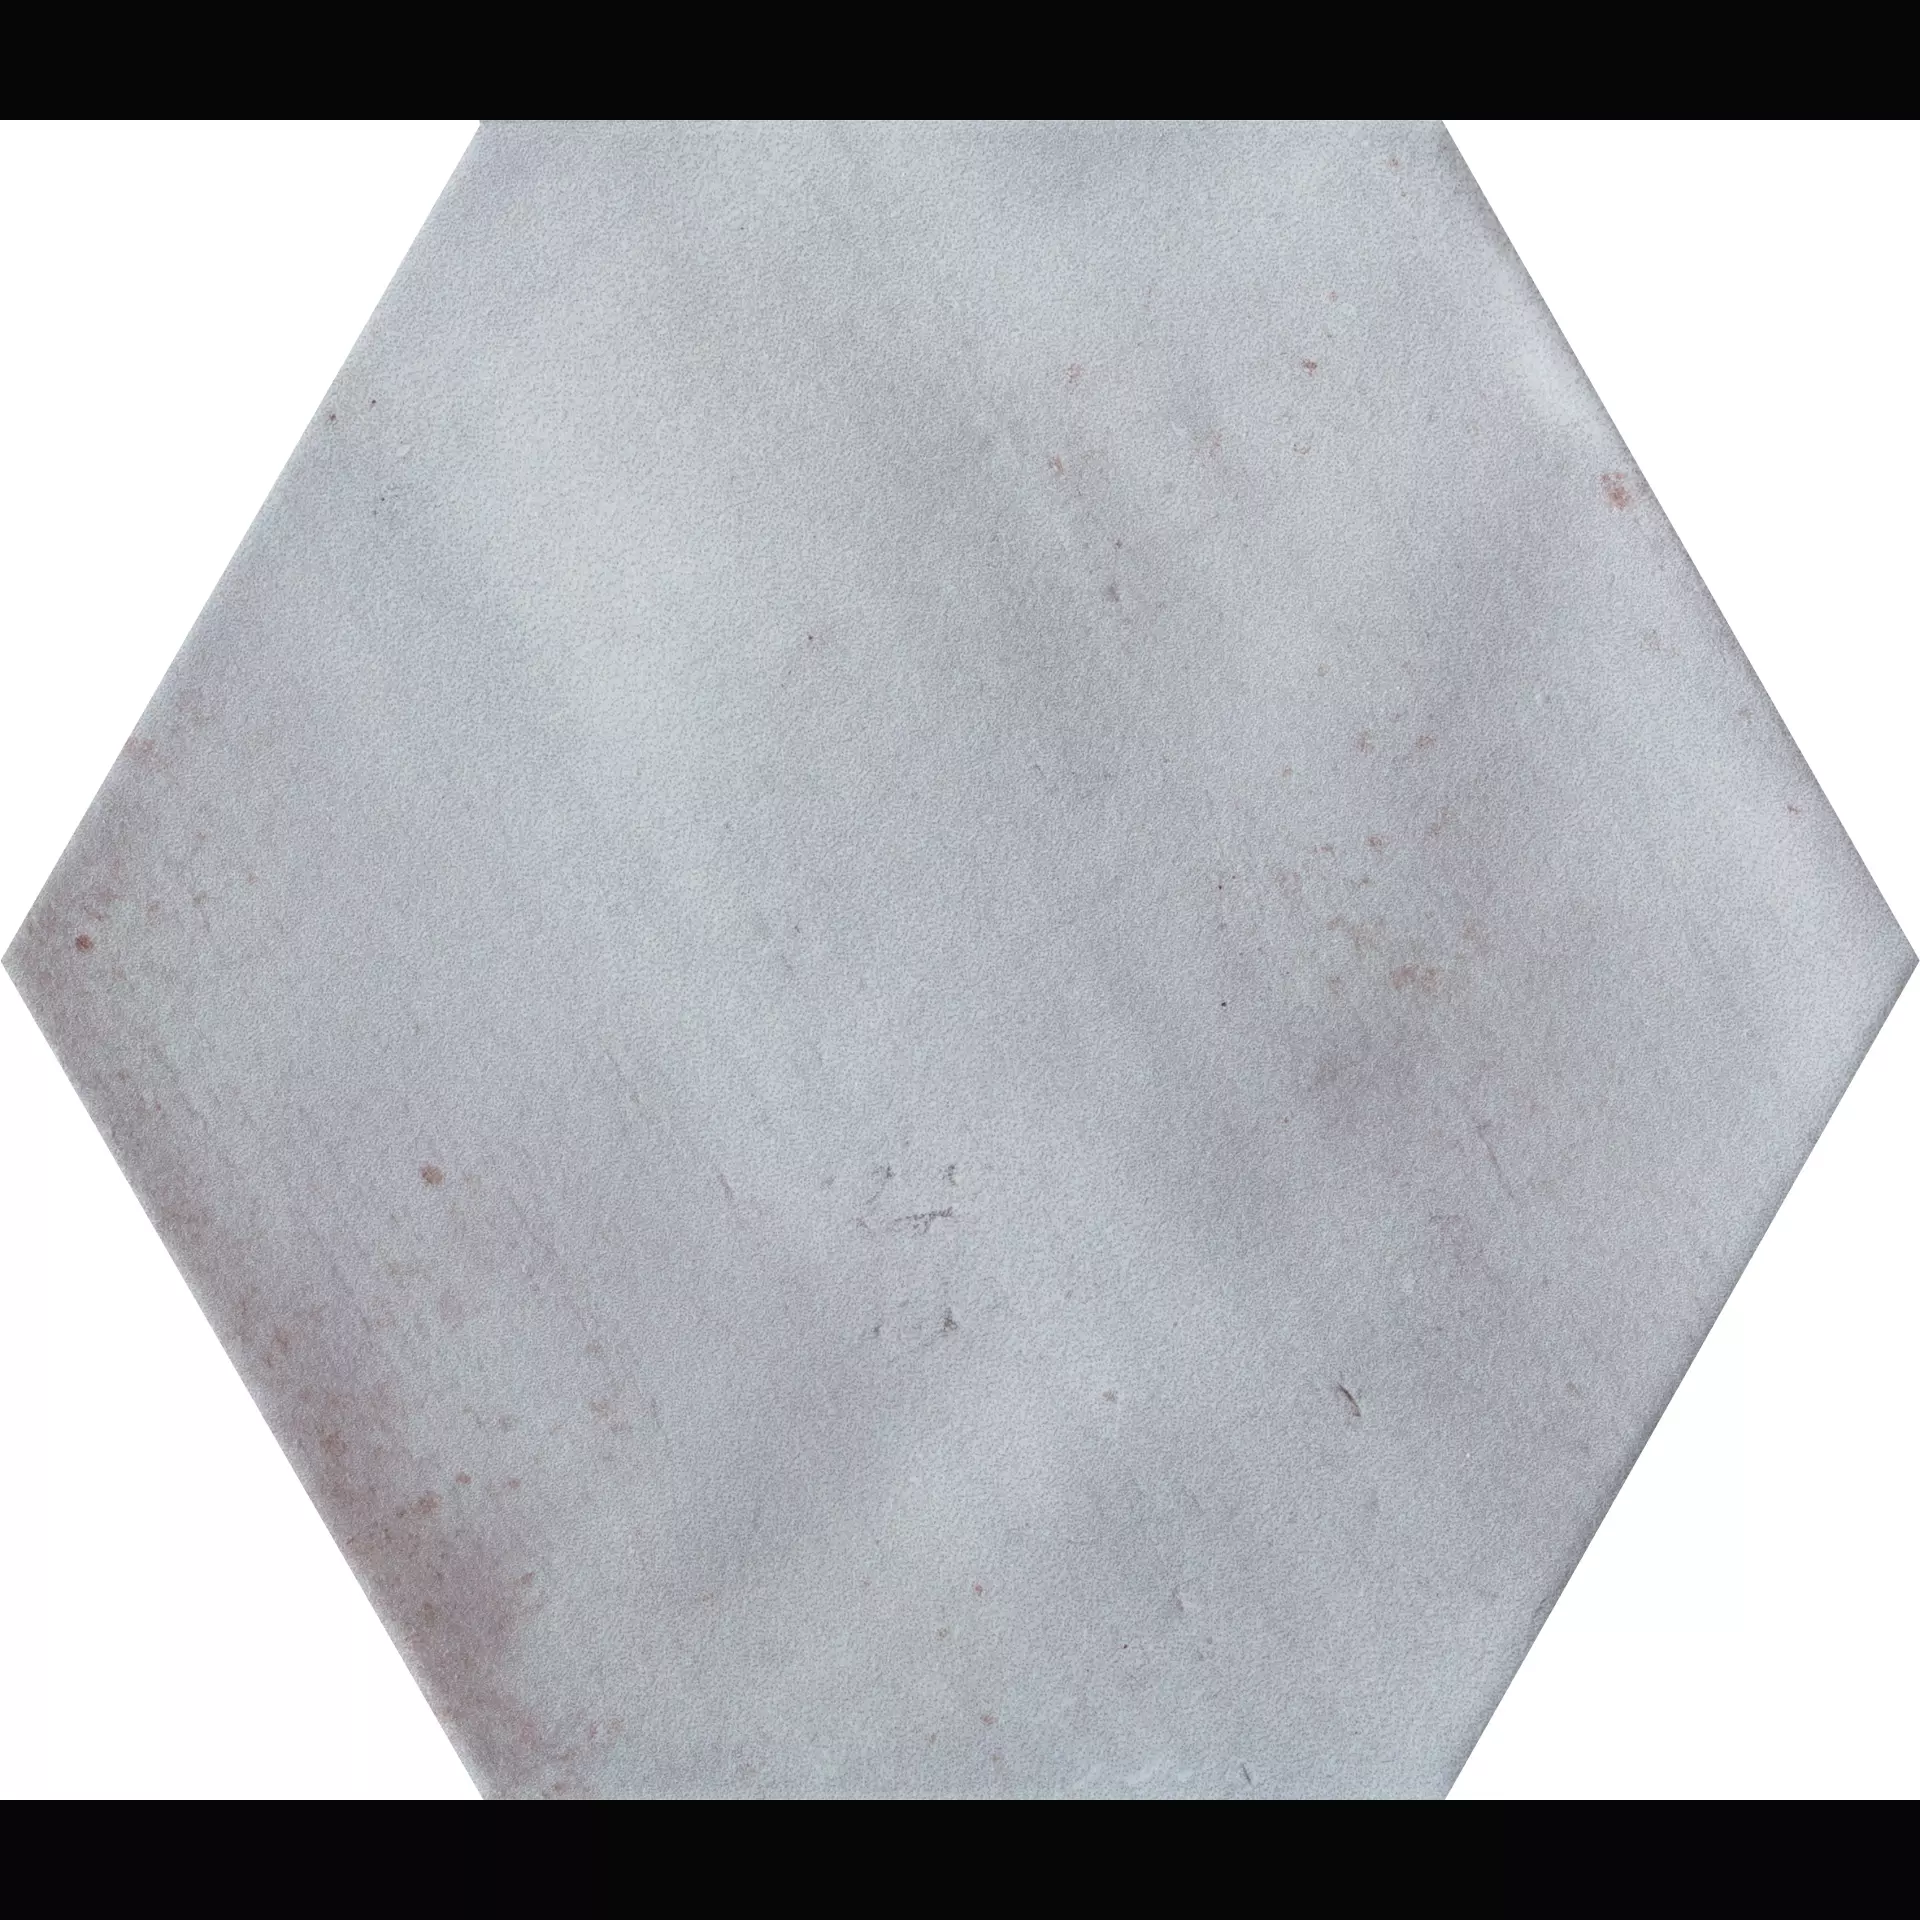 CIR Fuoritono Bianco Opaco Hexagon 1072708 24x27,7cm 10mm